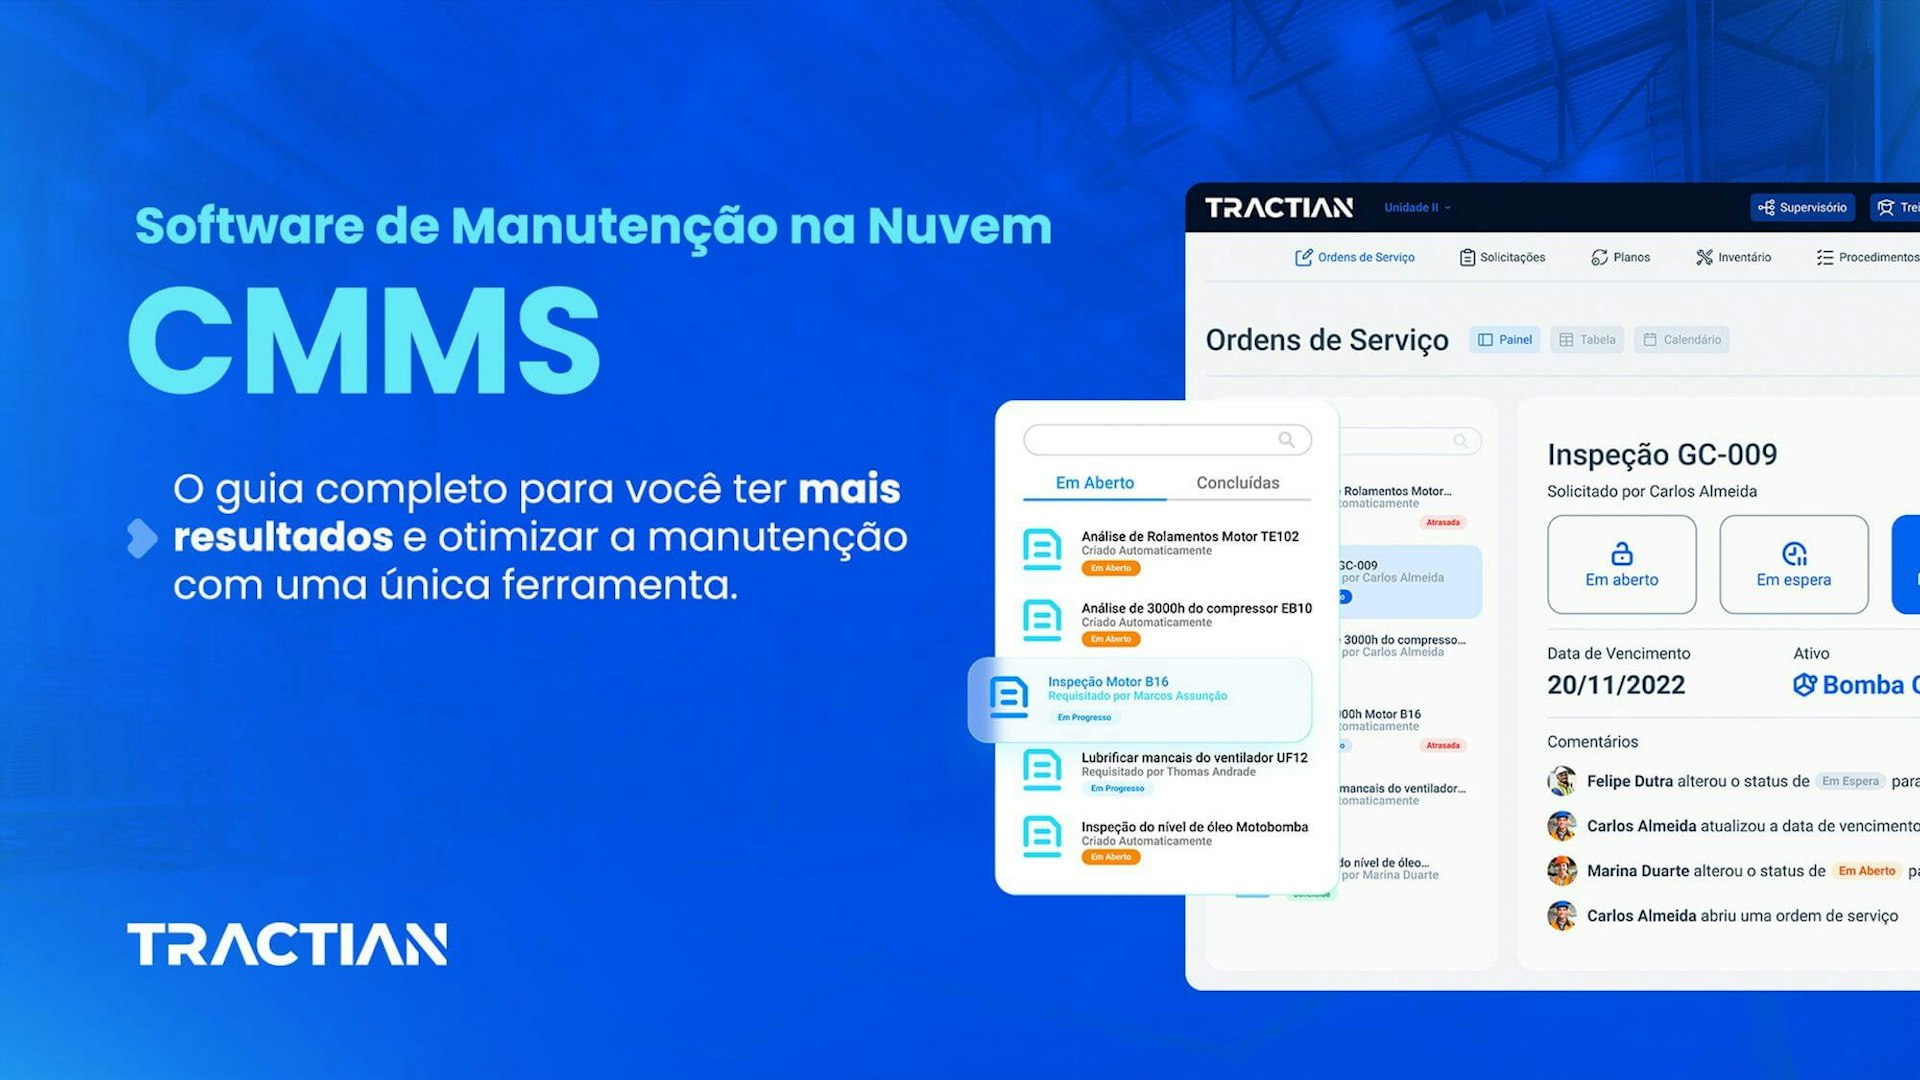 cmms-software-de-manutencao-online